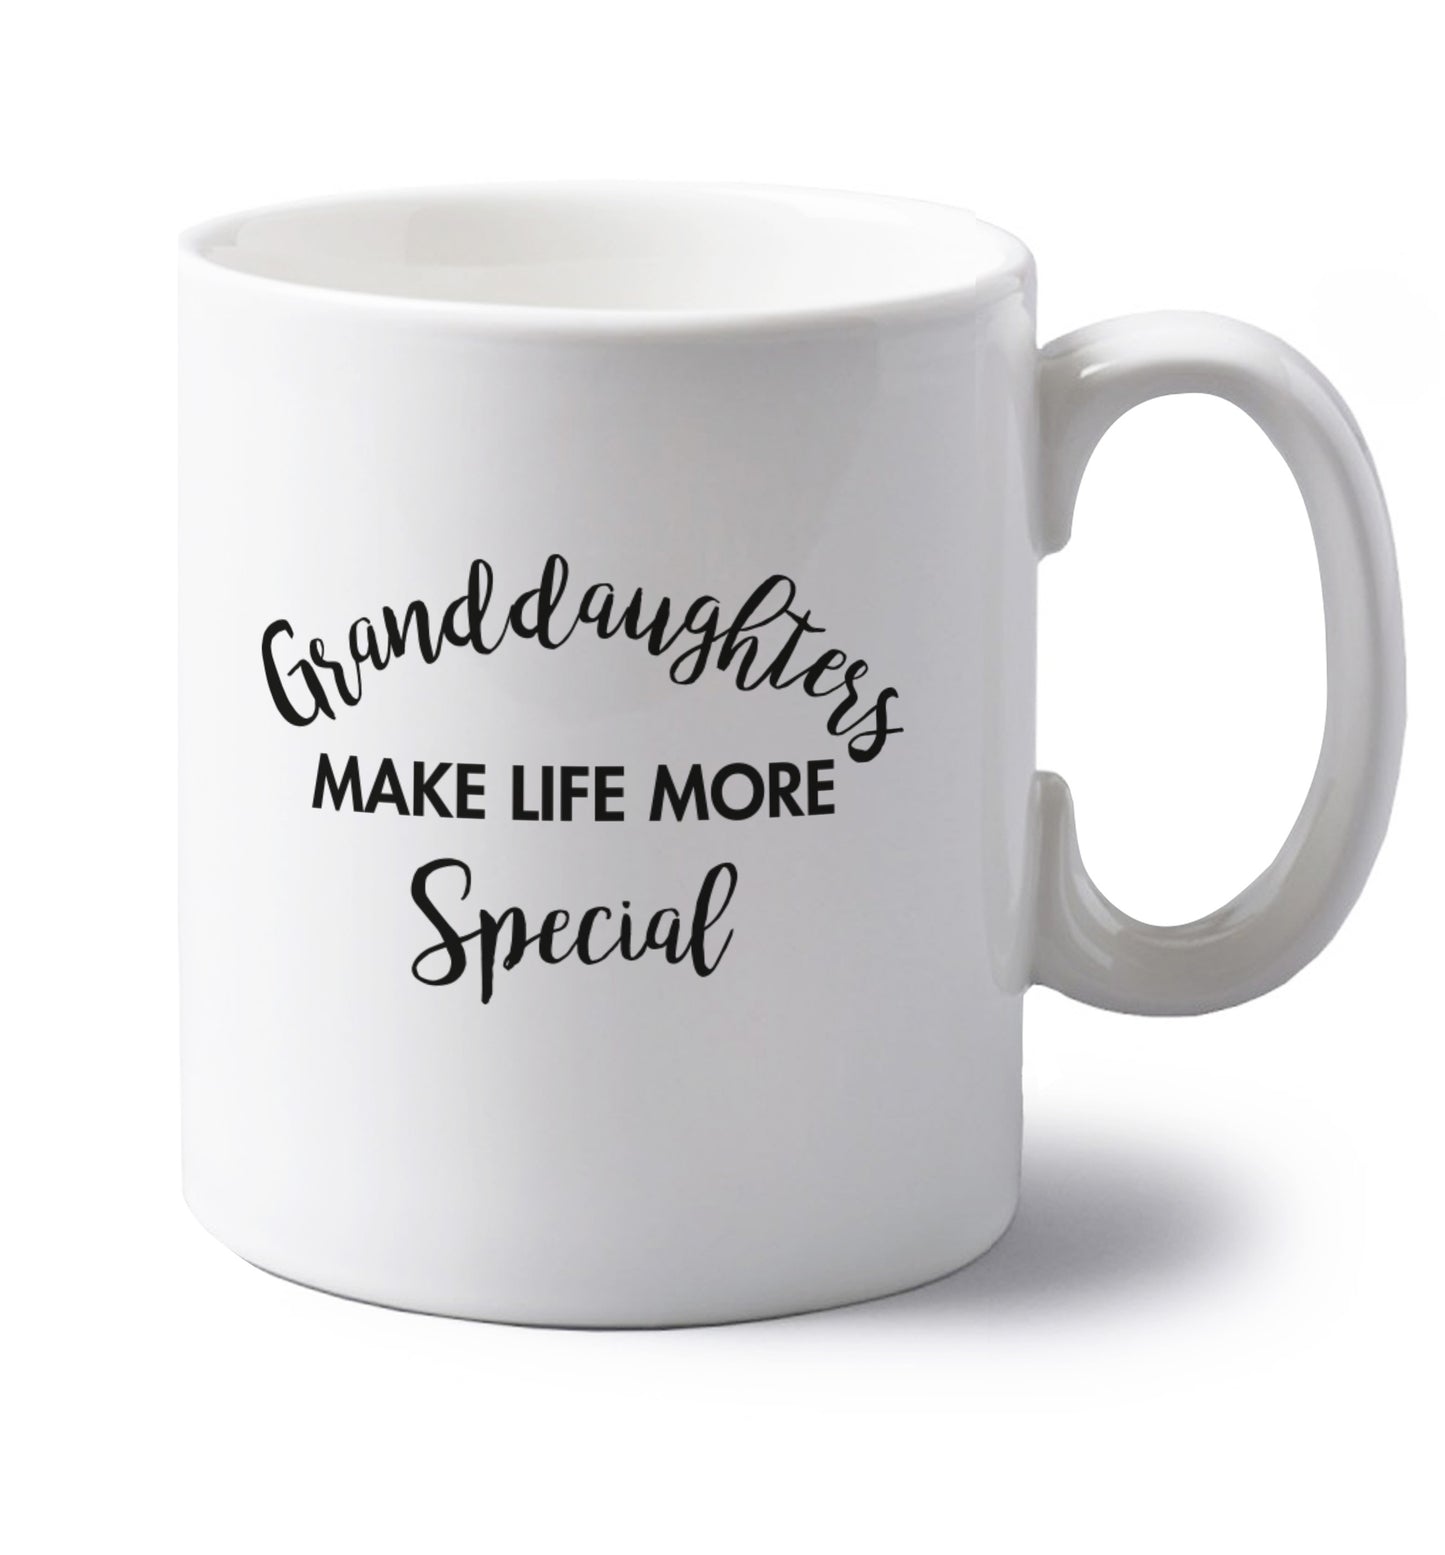 Granddaughters make life more special left handed white ceramic mug 